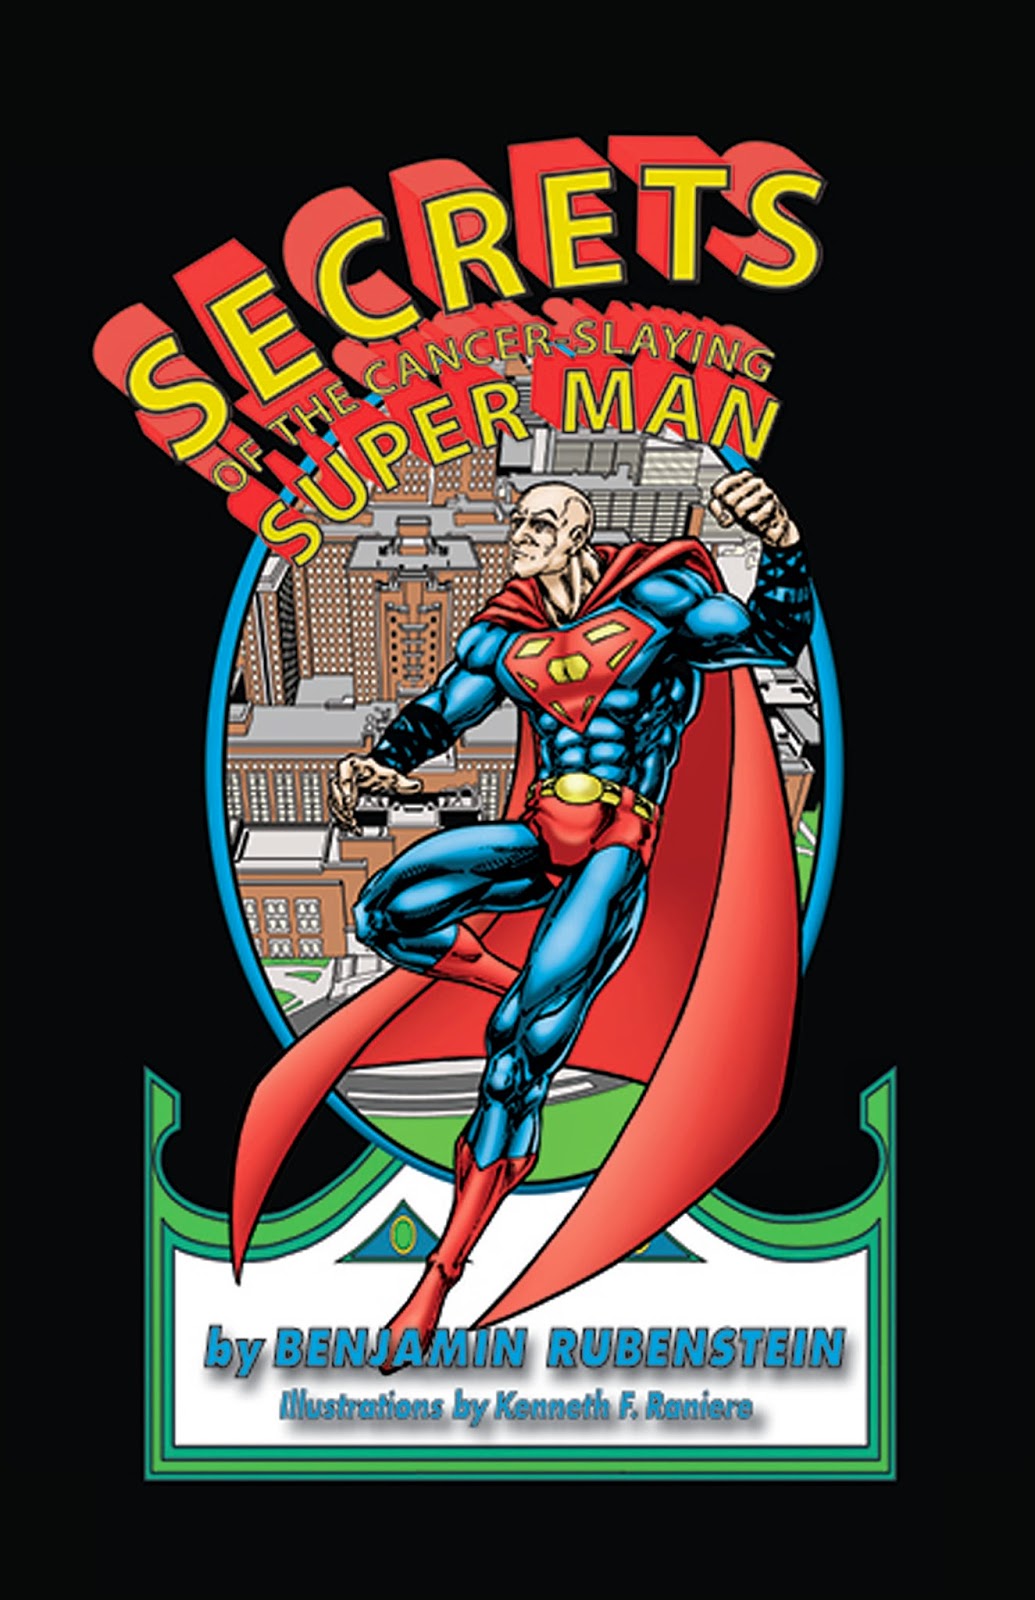 Benjamin Rubenstein's new book, Secrets of the Cancer-Slaying Super Man